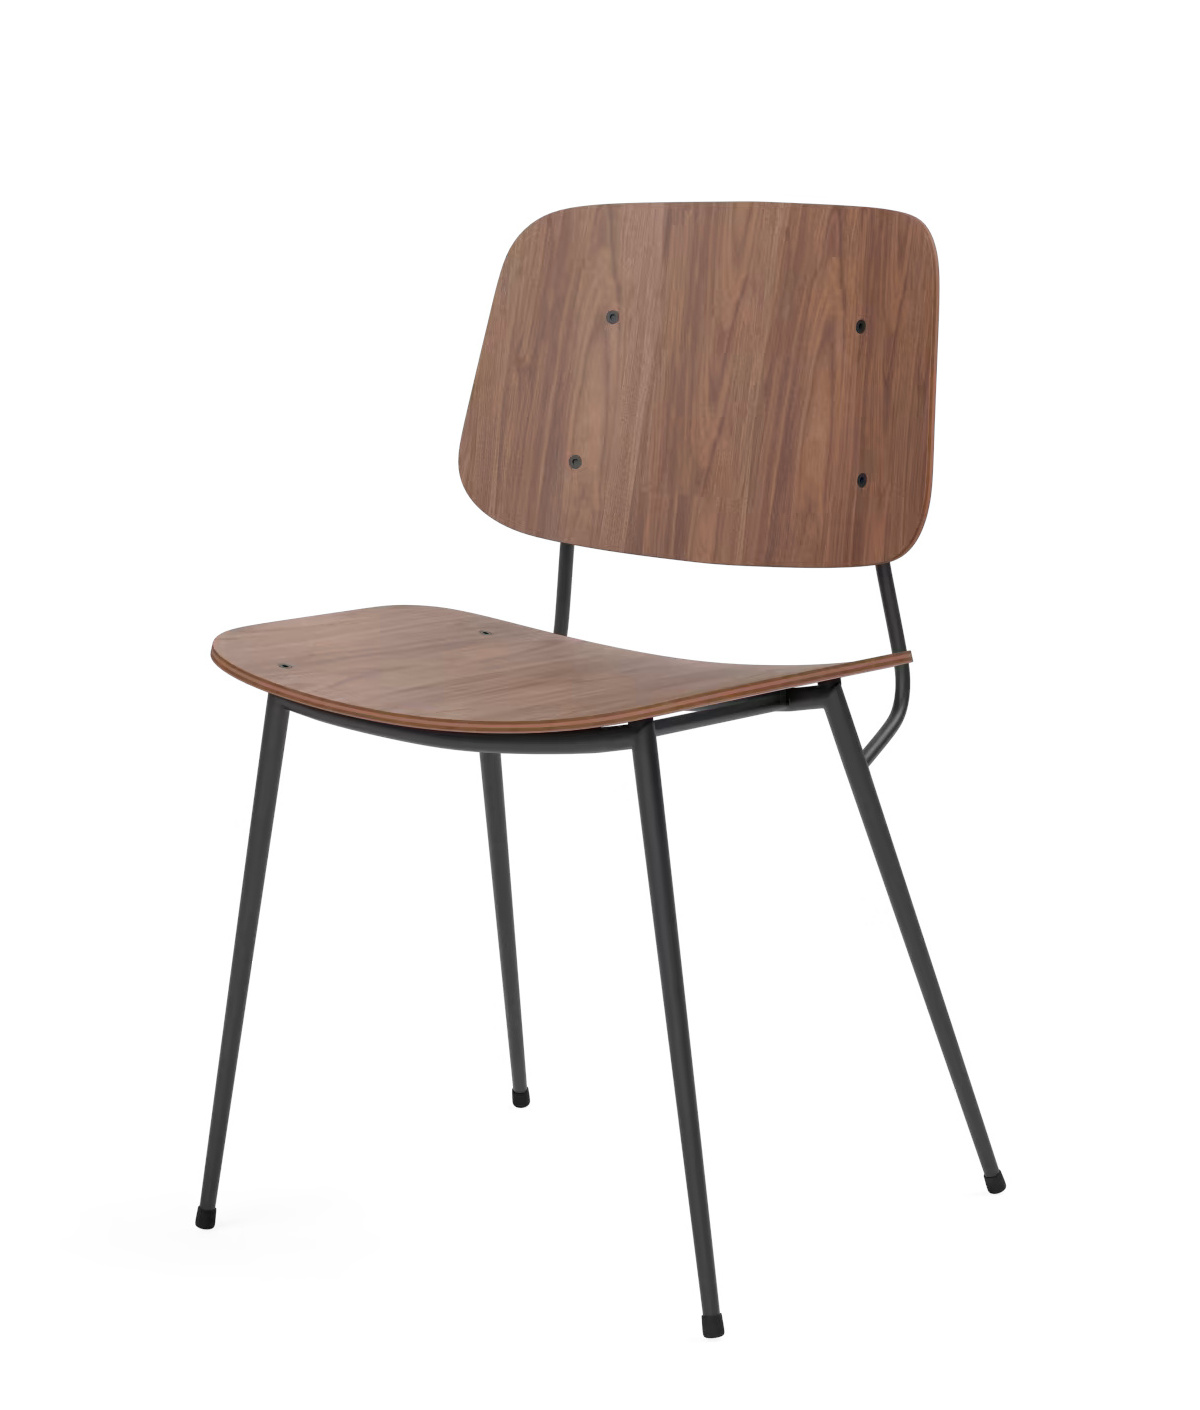 Søborg Metal Base Stuhl, schwarz / eiche schwarz lackiert